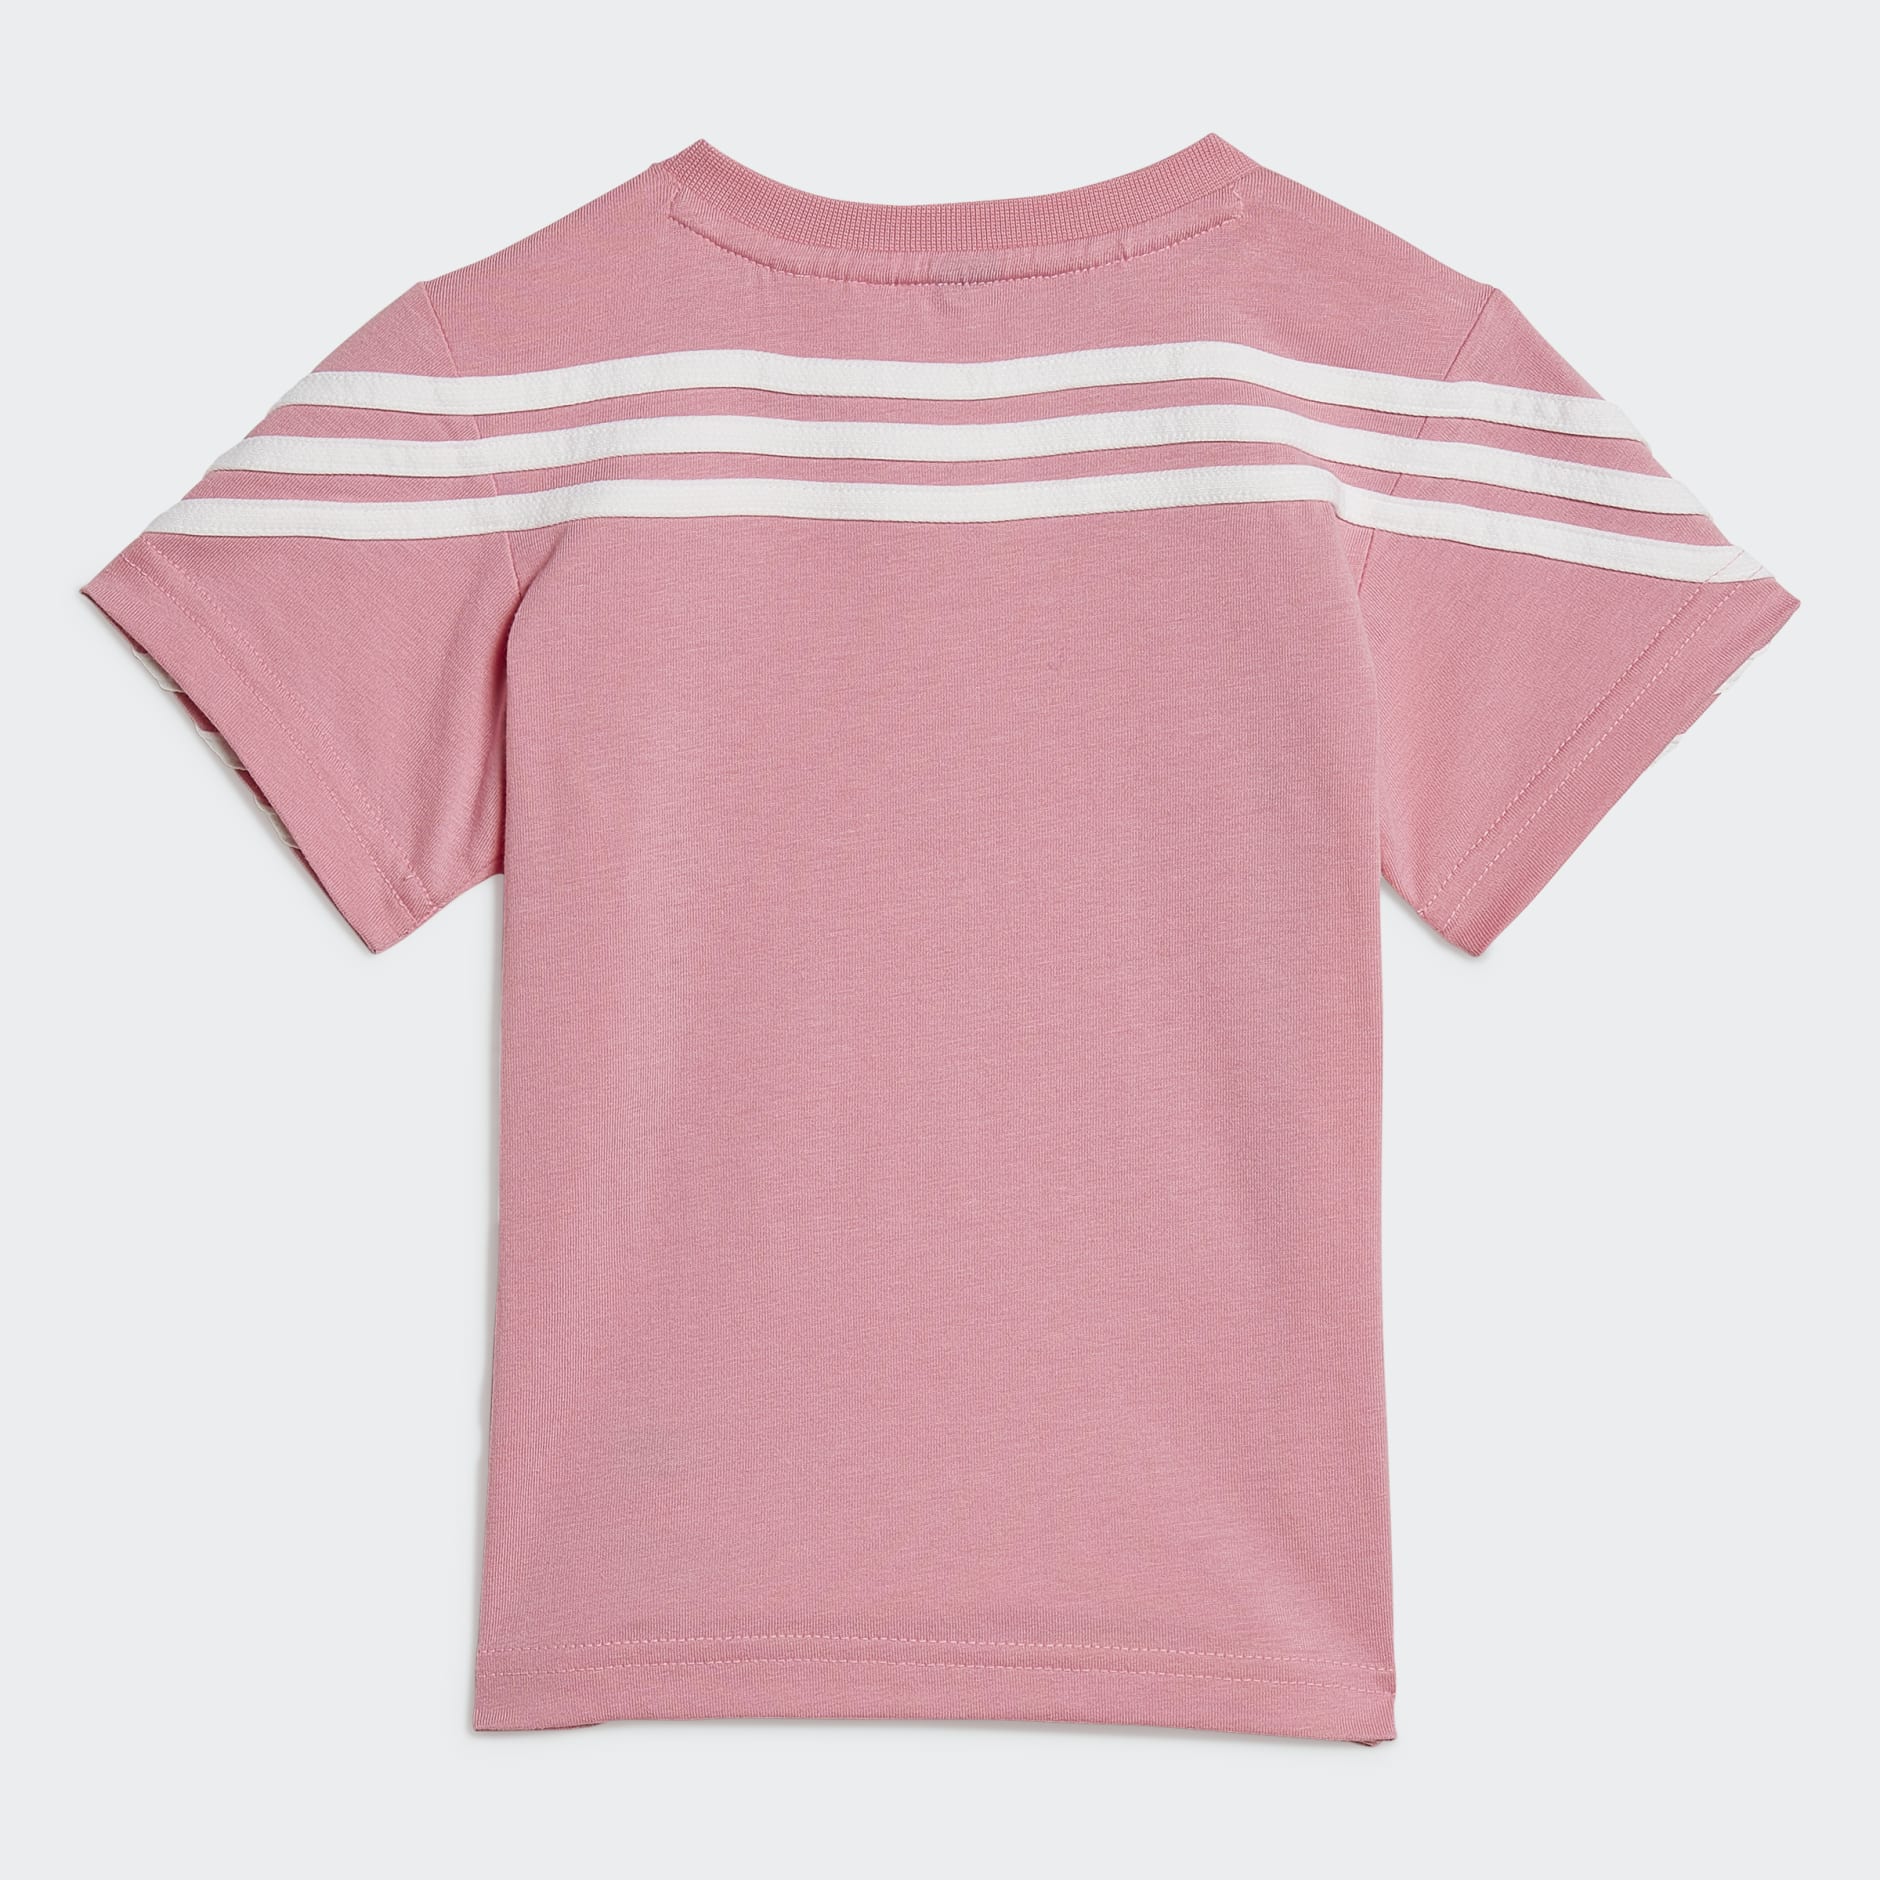 Clothing - adidas x Disney Mickey Mouse Summer Set - Pink | adidas ...